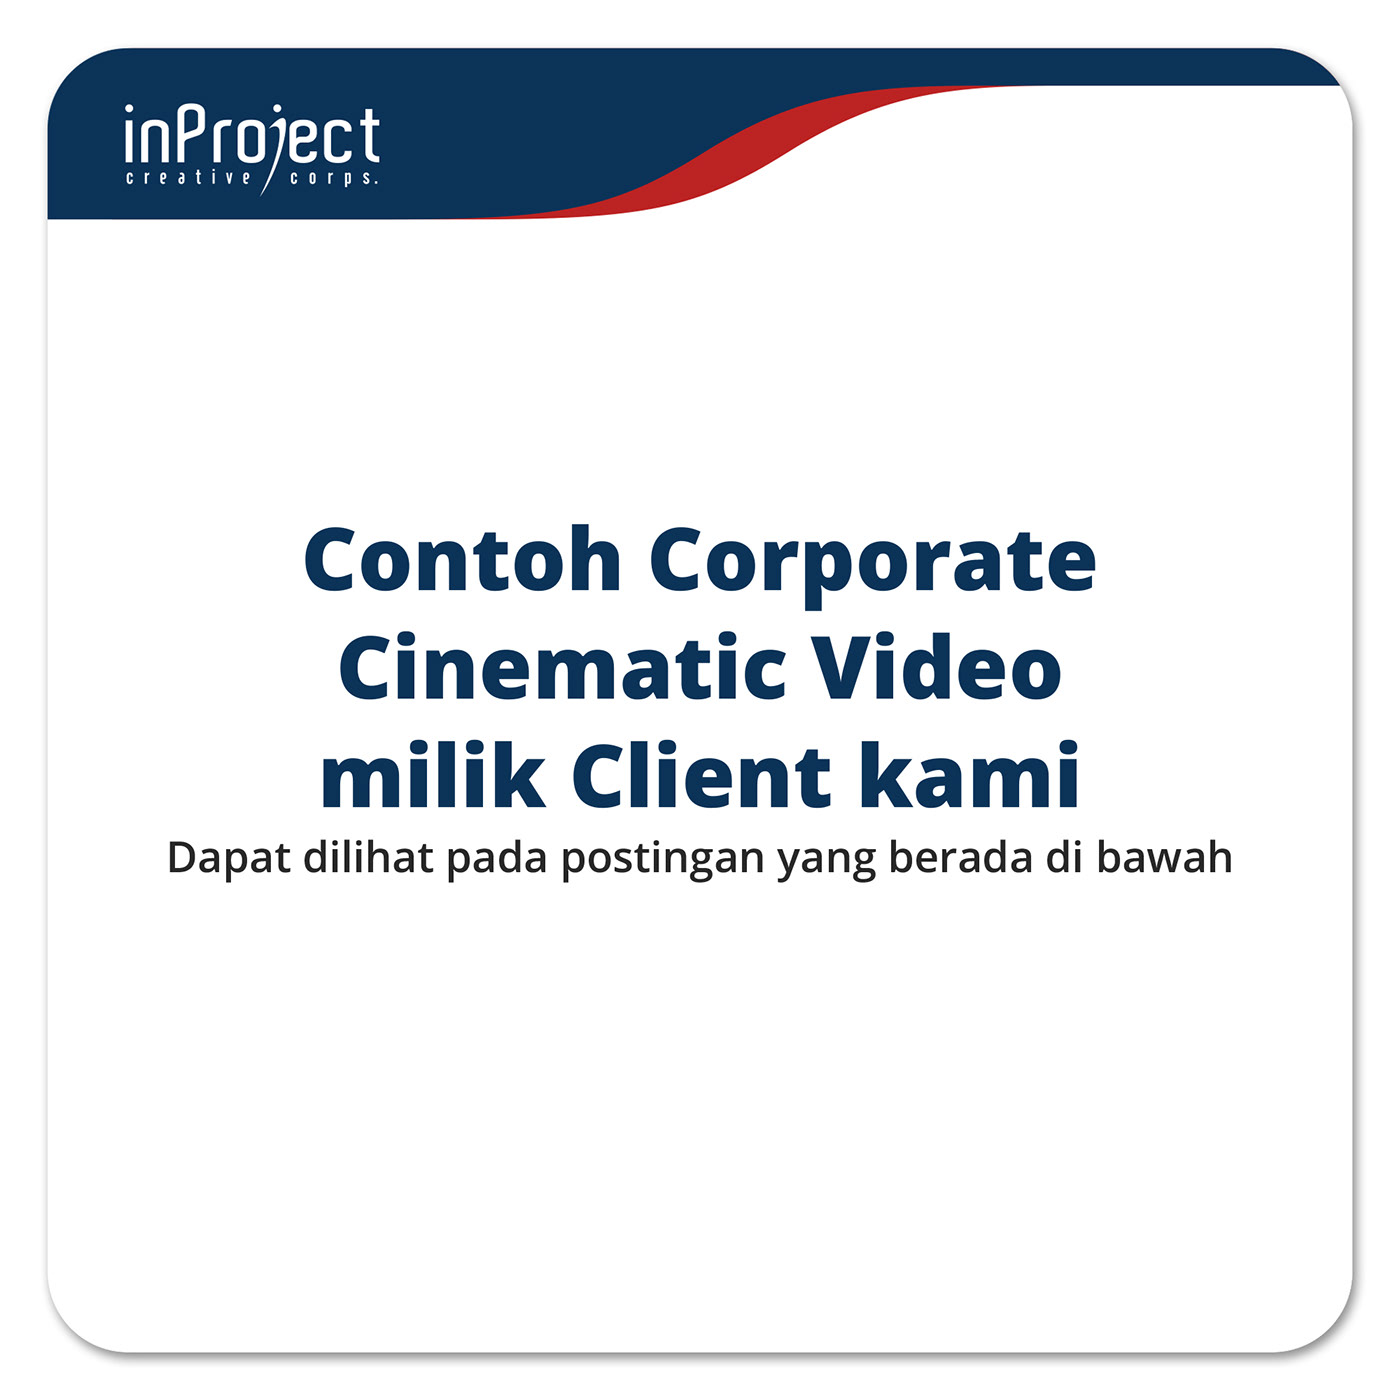 Simon Designs Cinematic Video movie designer InProject Corps graphic art documentation video art video design